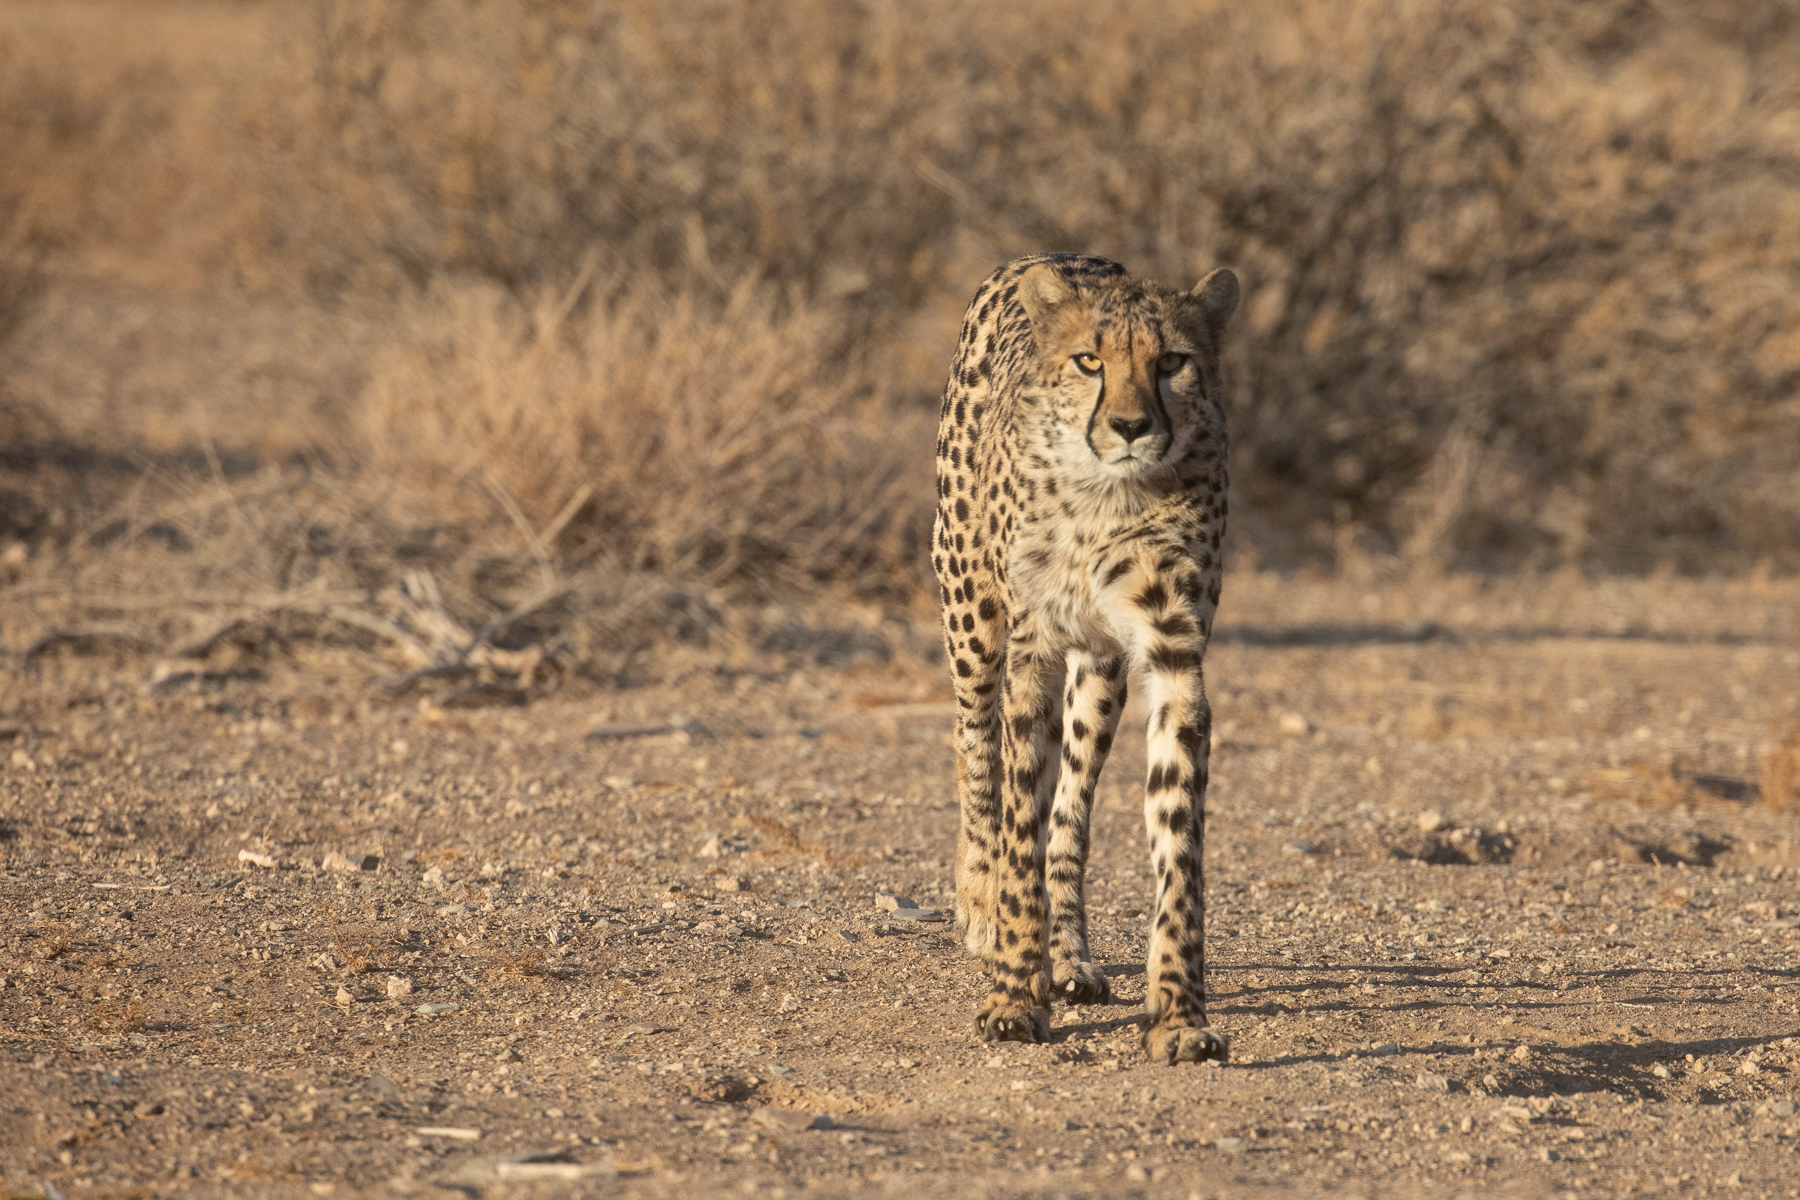 A cheetah on our wildlife photography tour of Namibia